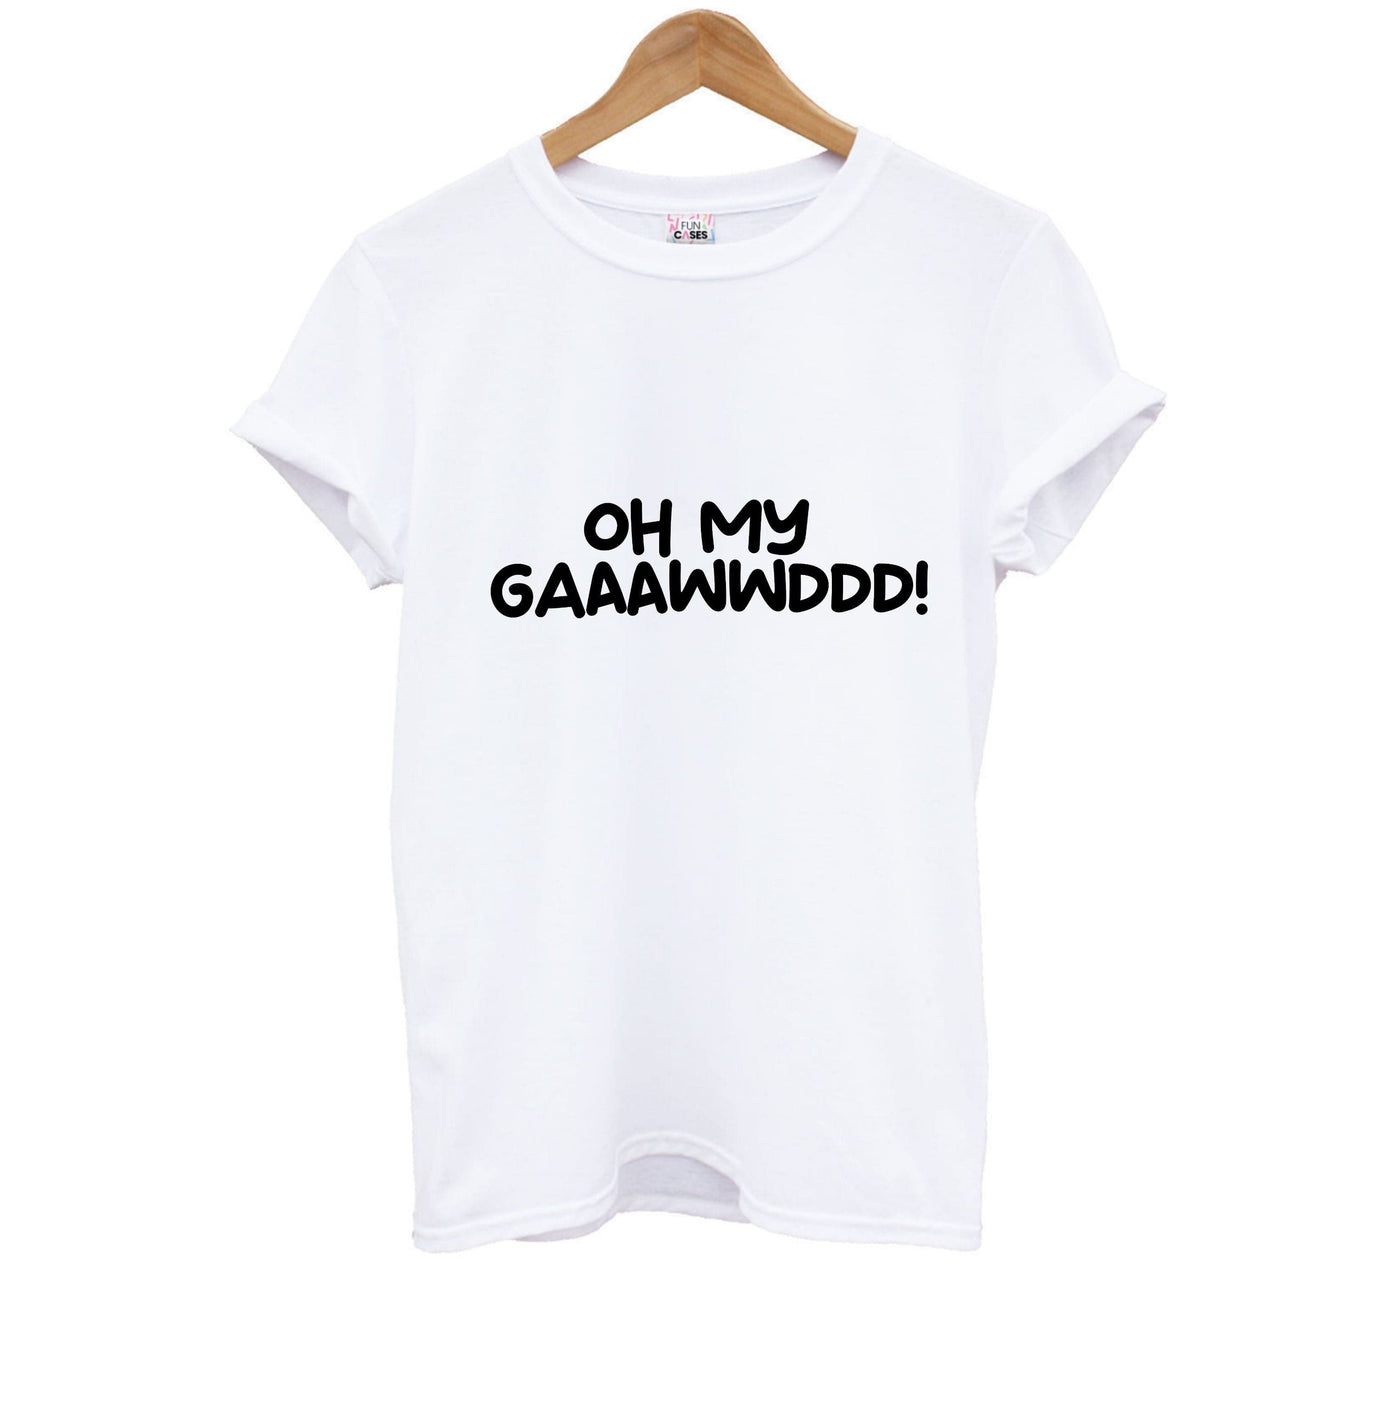 Oh My Gaaawwddd! - Islanders Kids T-Shirt